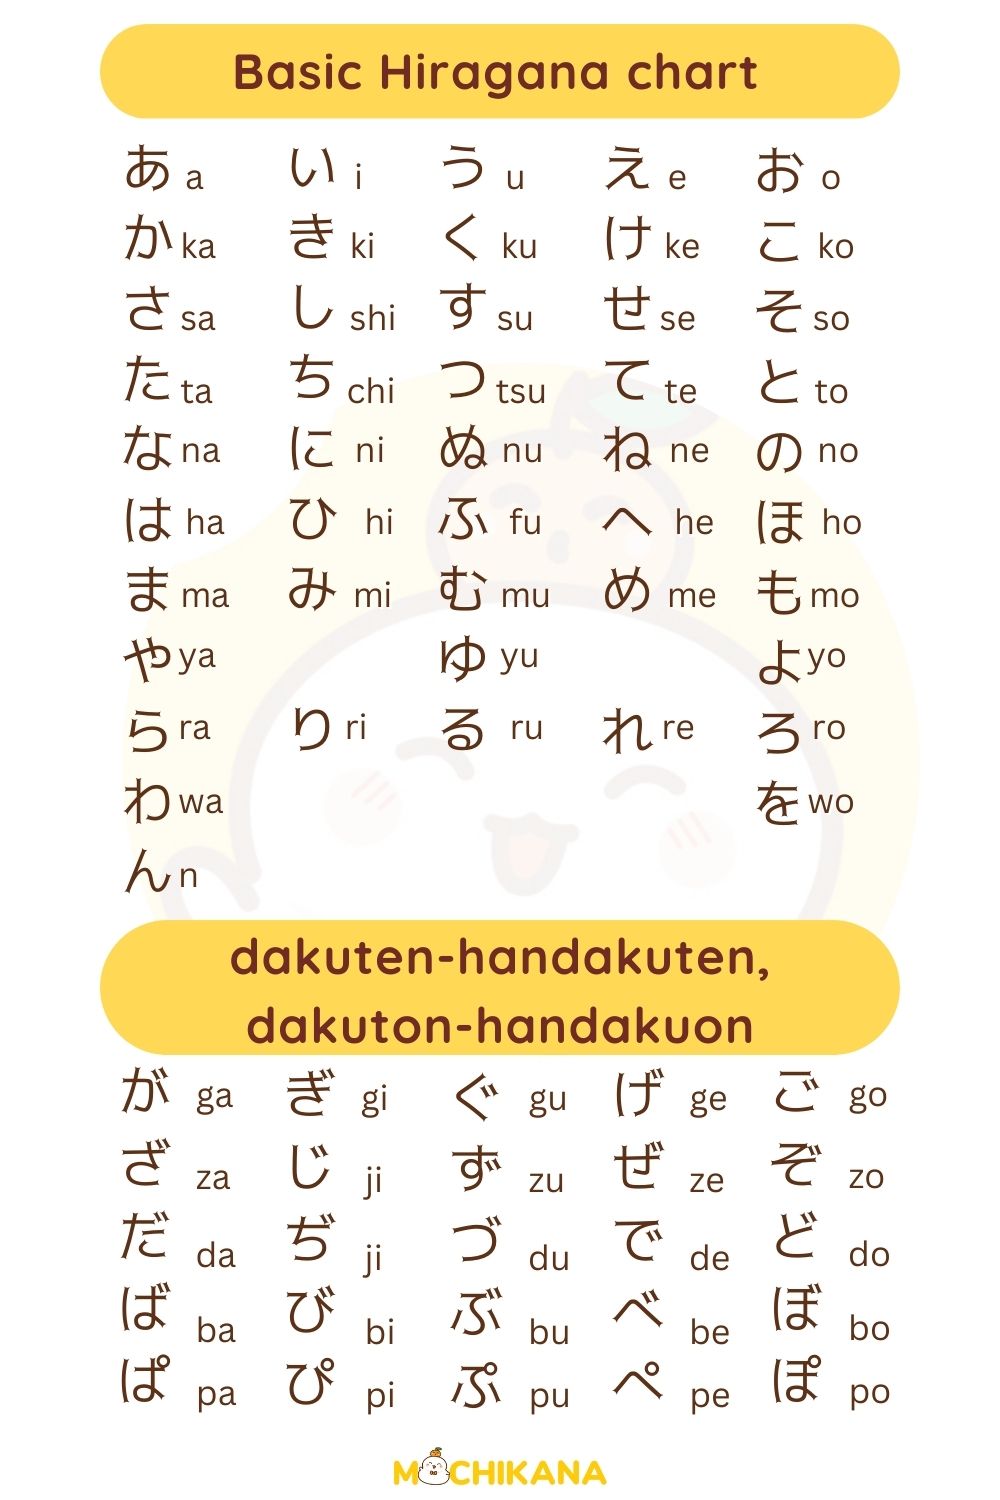 basic Hiragana with dakuon and handakuon pdf